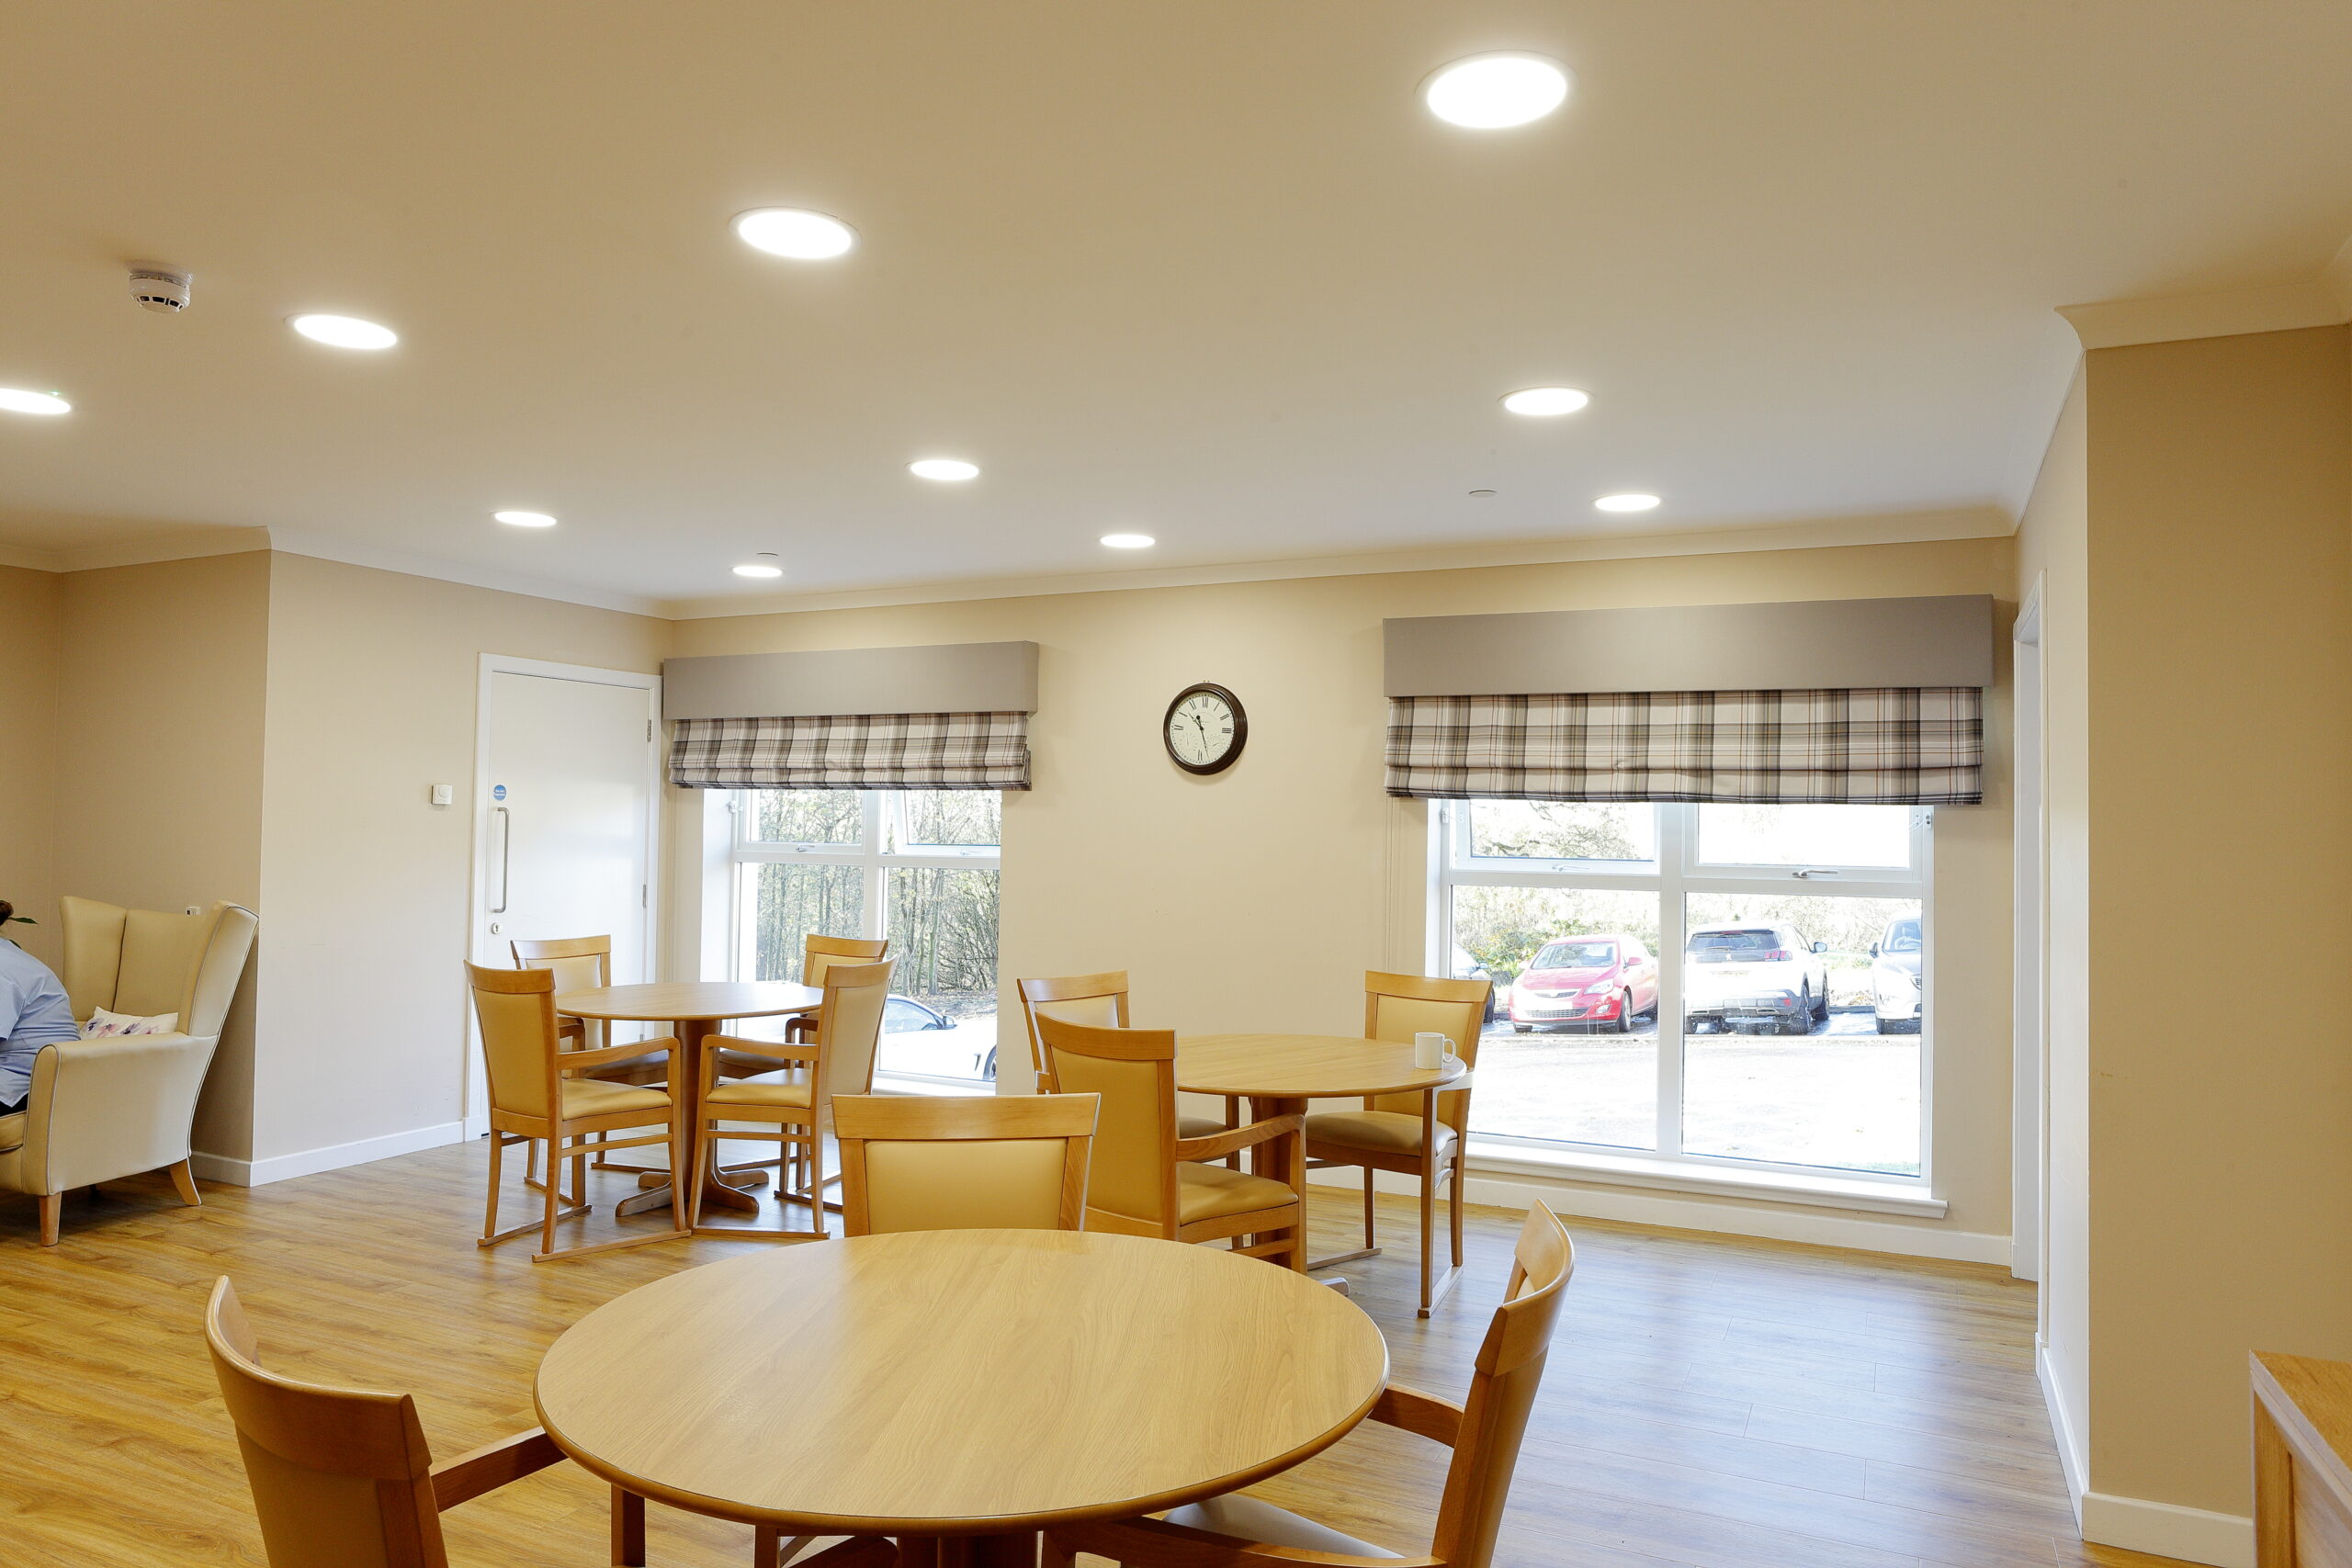 Tamlite Rosehall Care Home communal area LED lighting